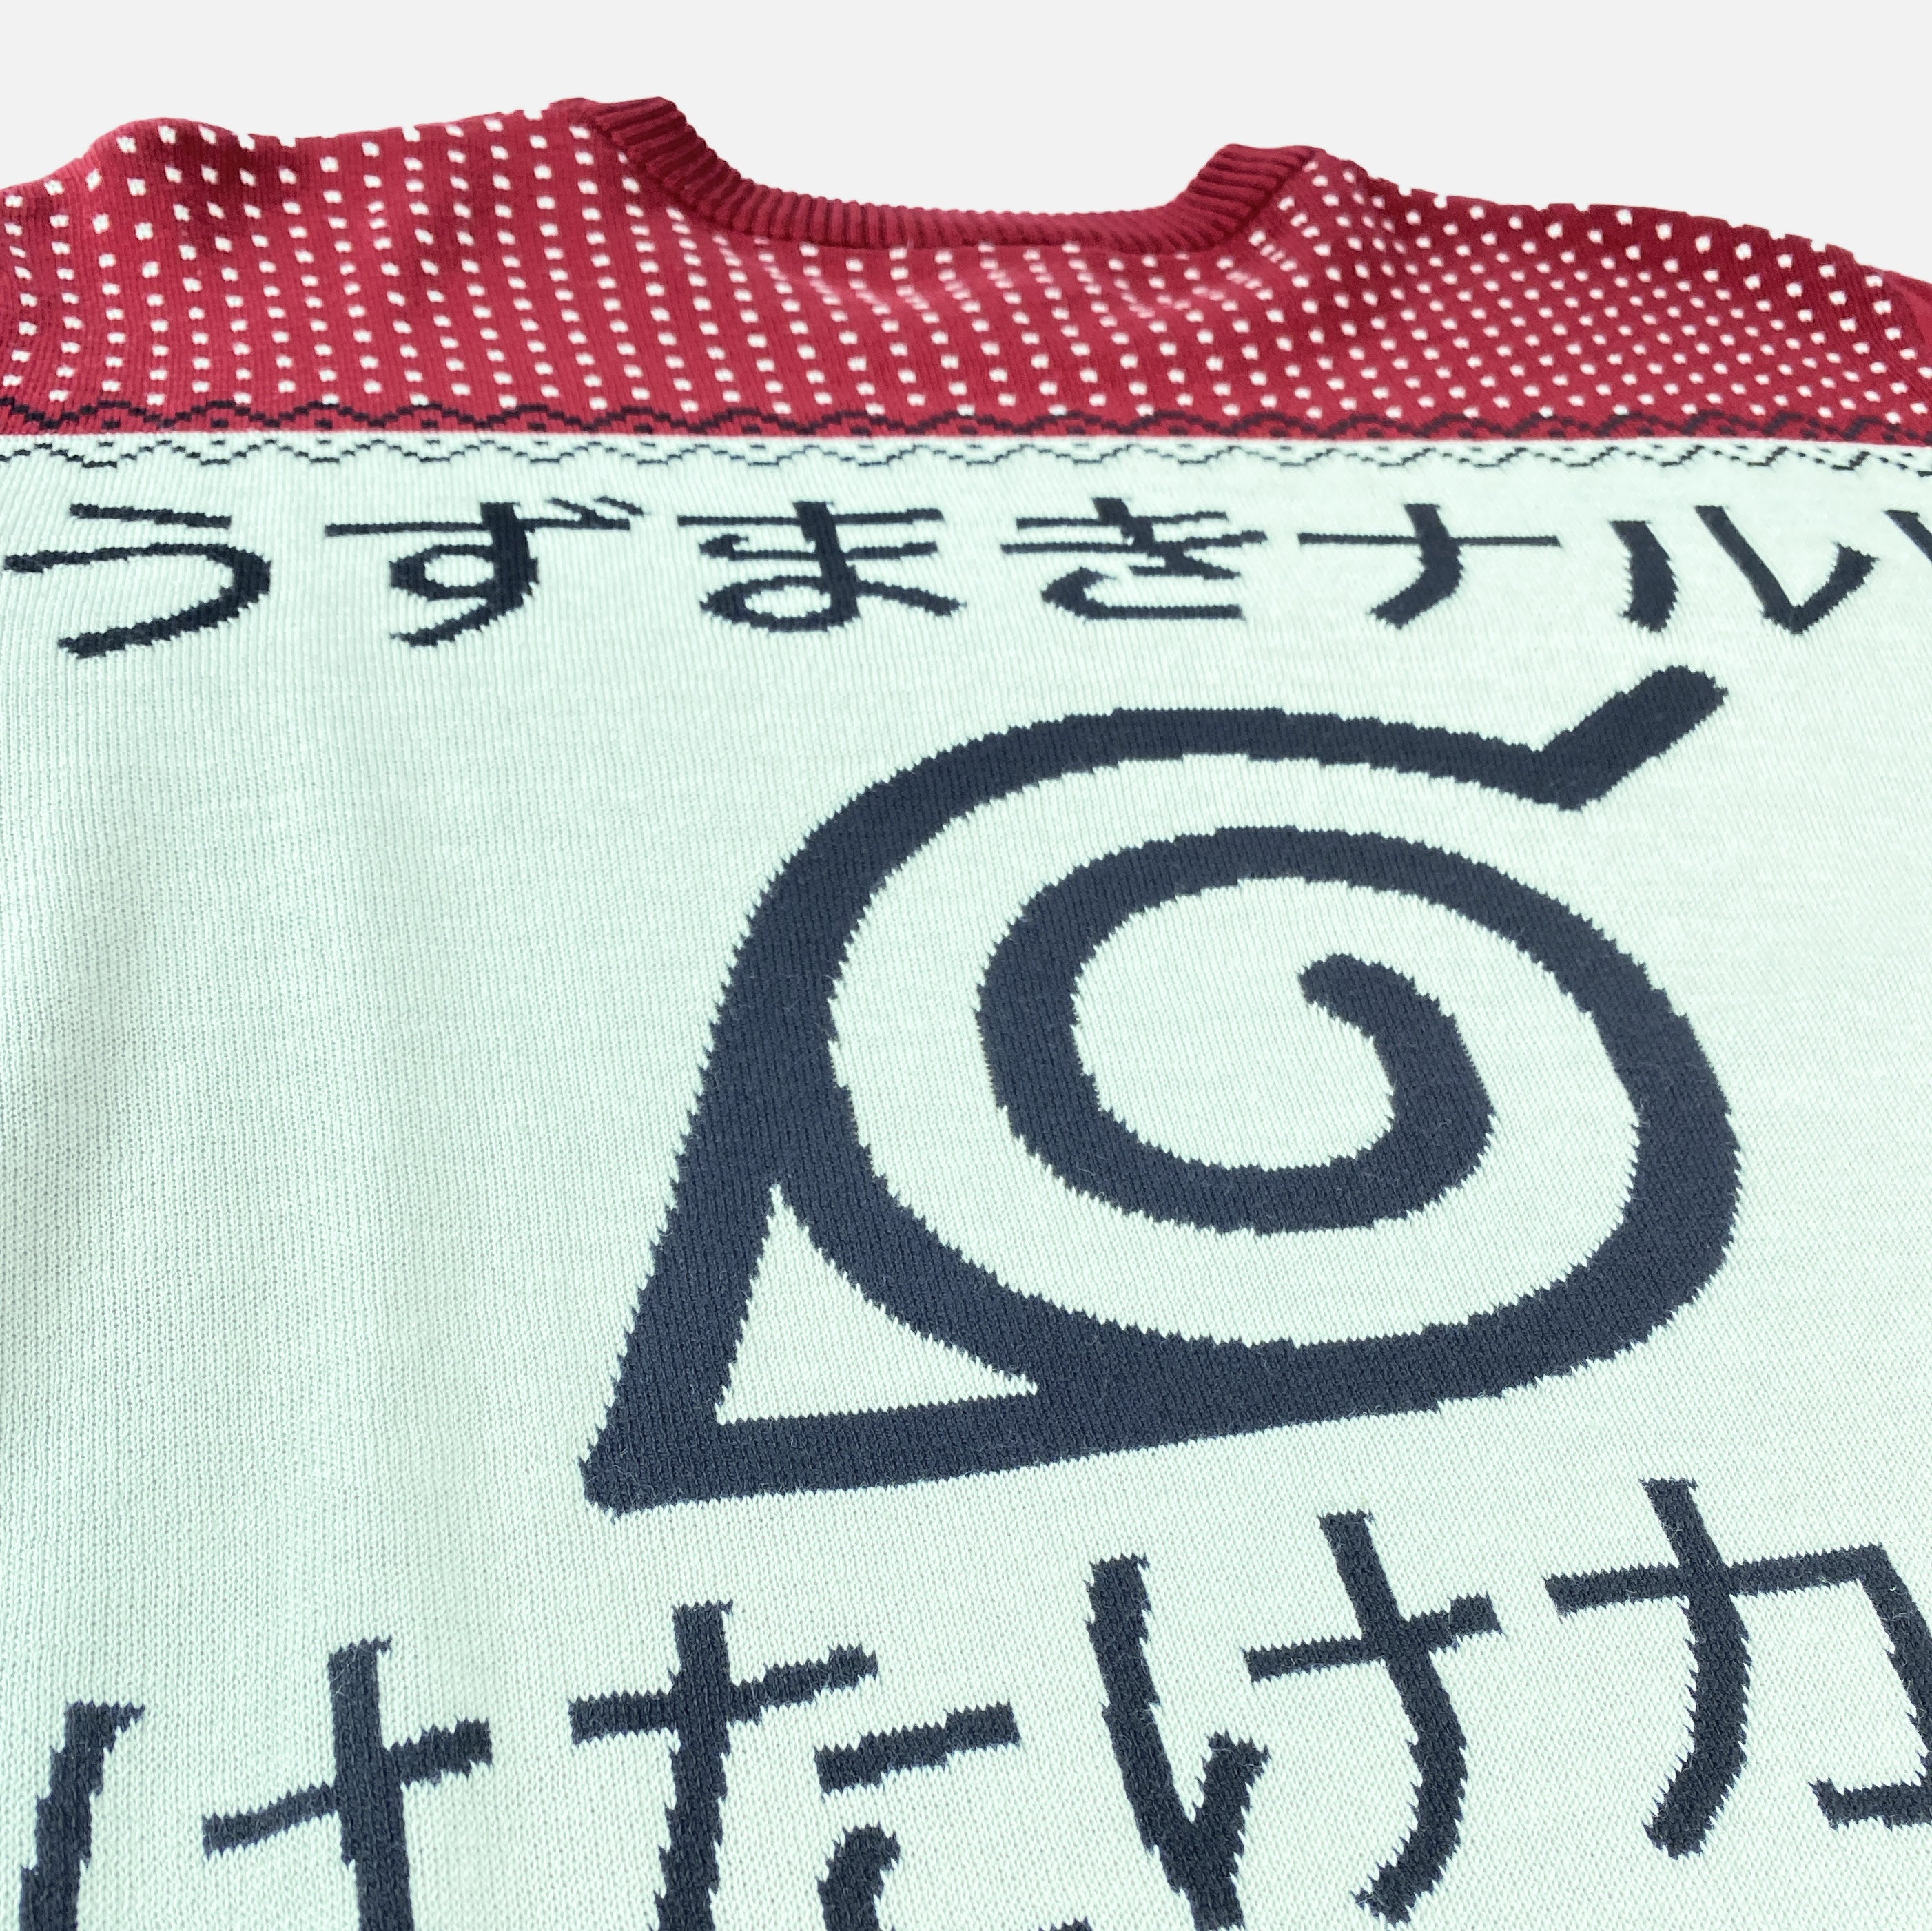 Naruto Shippuden - Naruto Kakashi Chibi Holiday Sweater - Crunchyroll Exclusive! image count 3